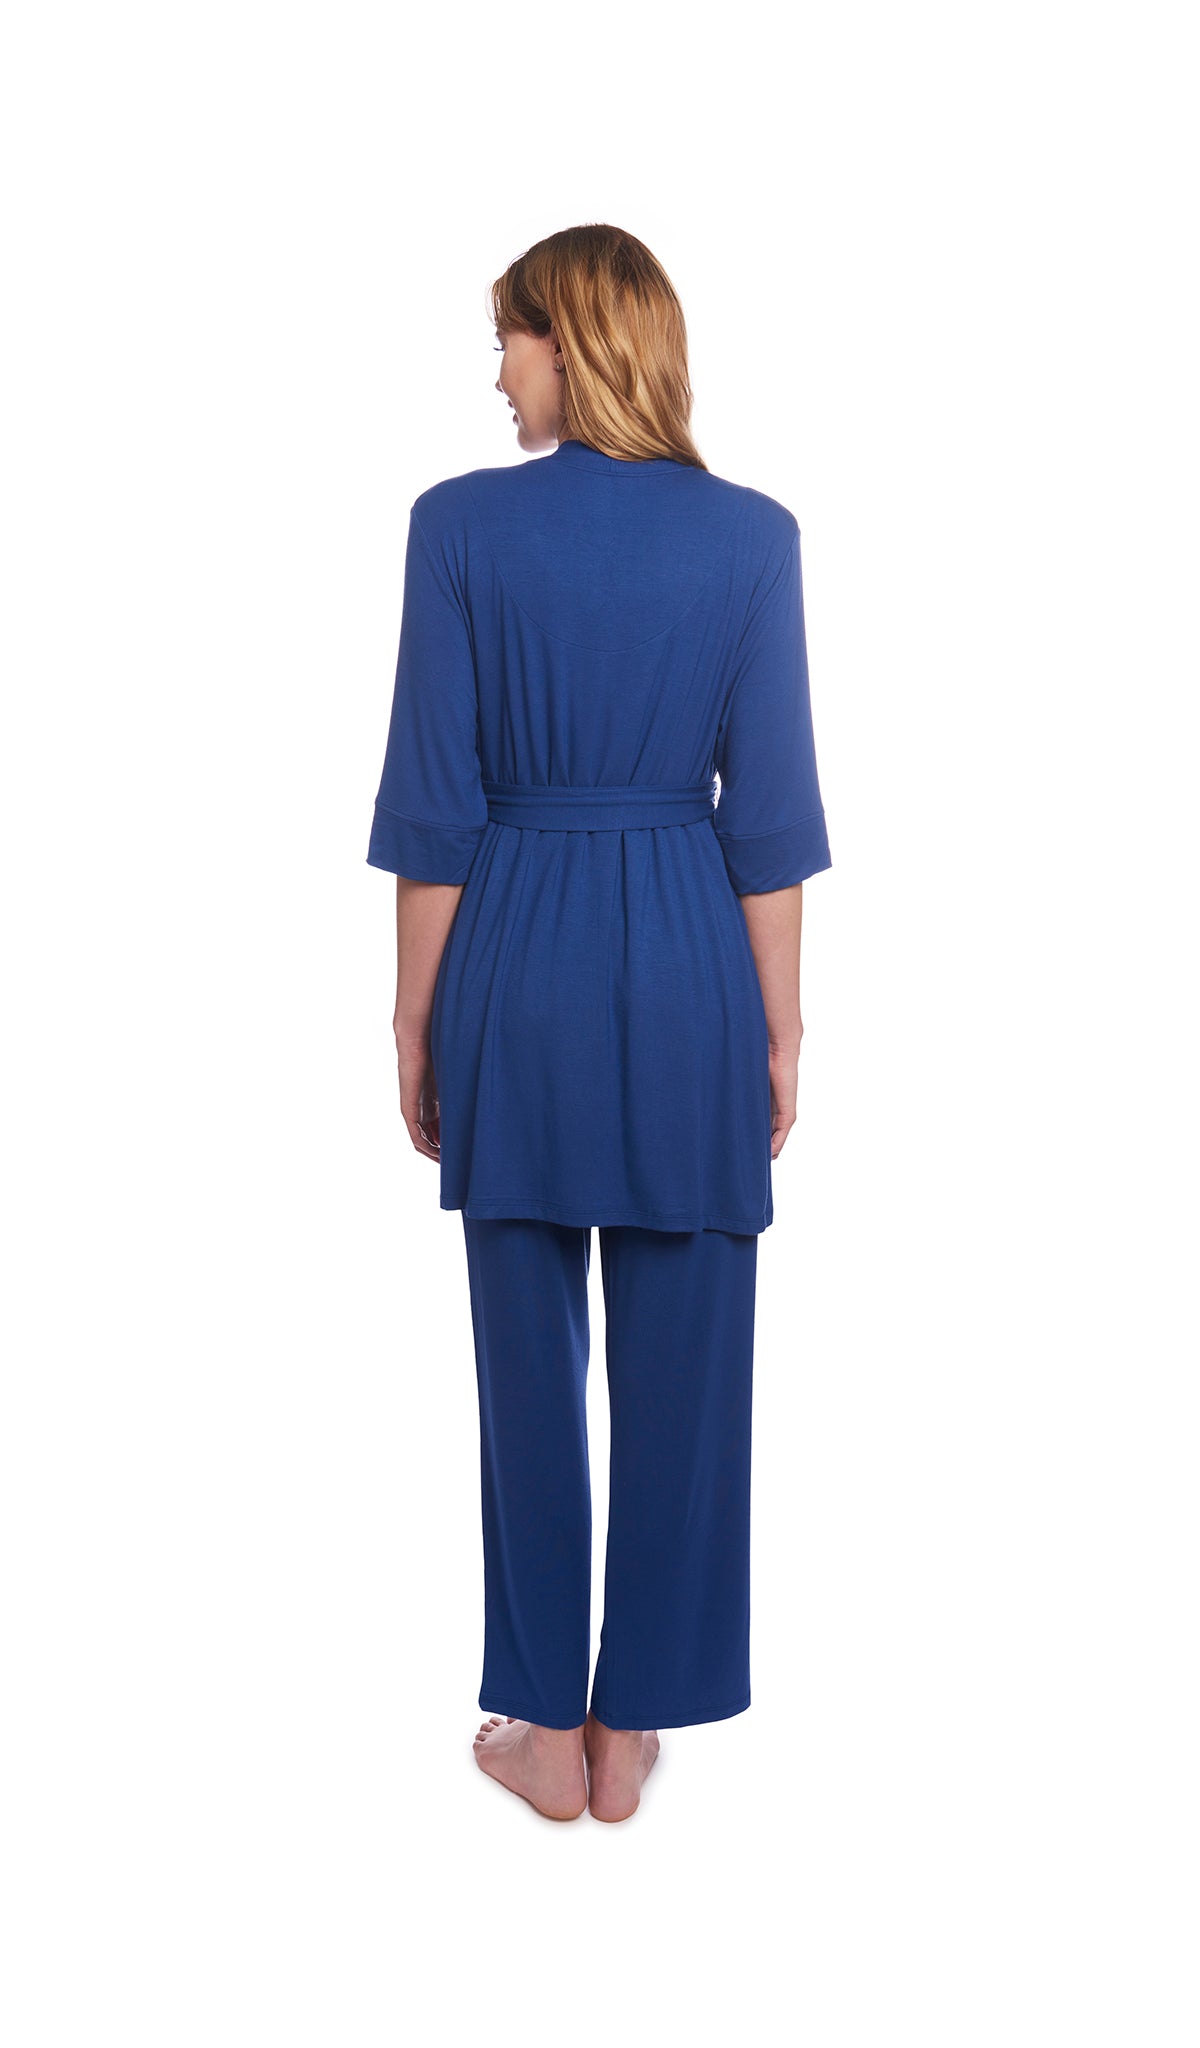 Denim Blue Analise 3-Piece Set, back shot of woman wearing robe and pant.